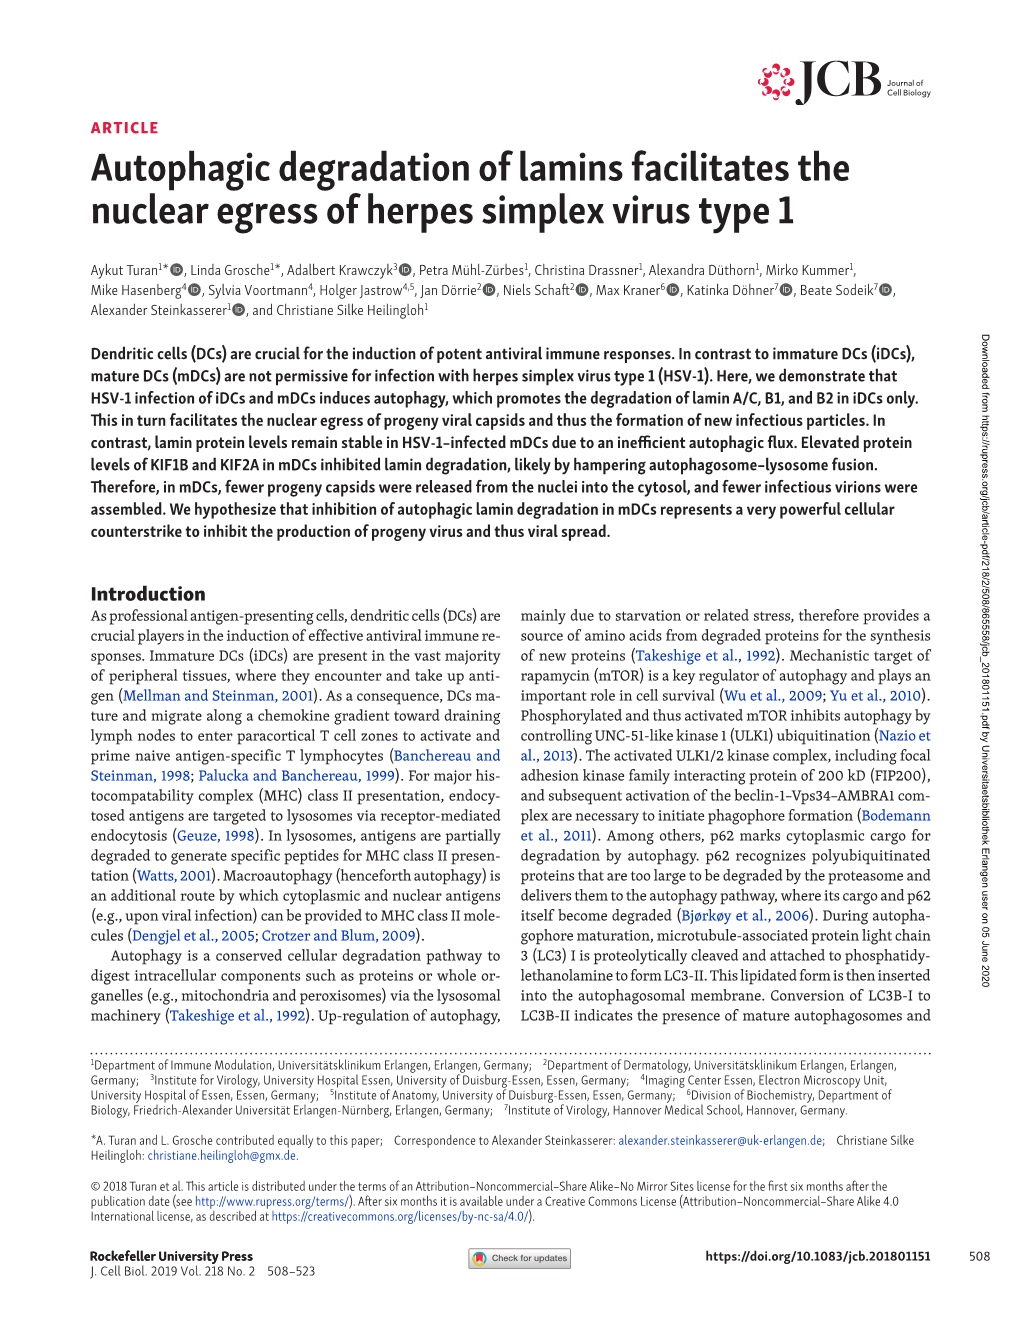 Autophagic Degradation of Lamins Facilitates the Nuclear Egress of Herpes Simplex Virus Type 1